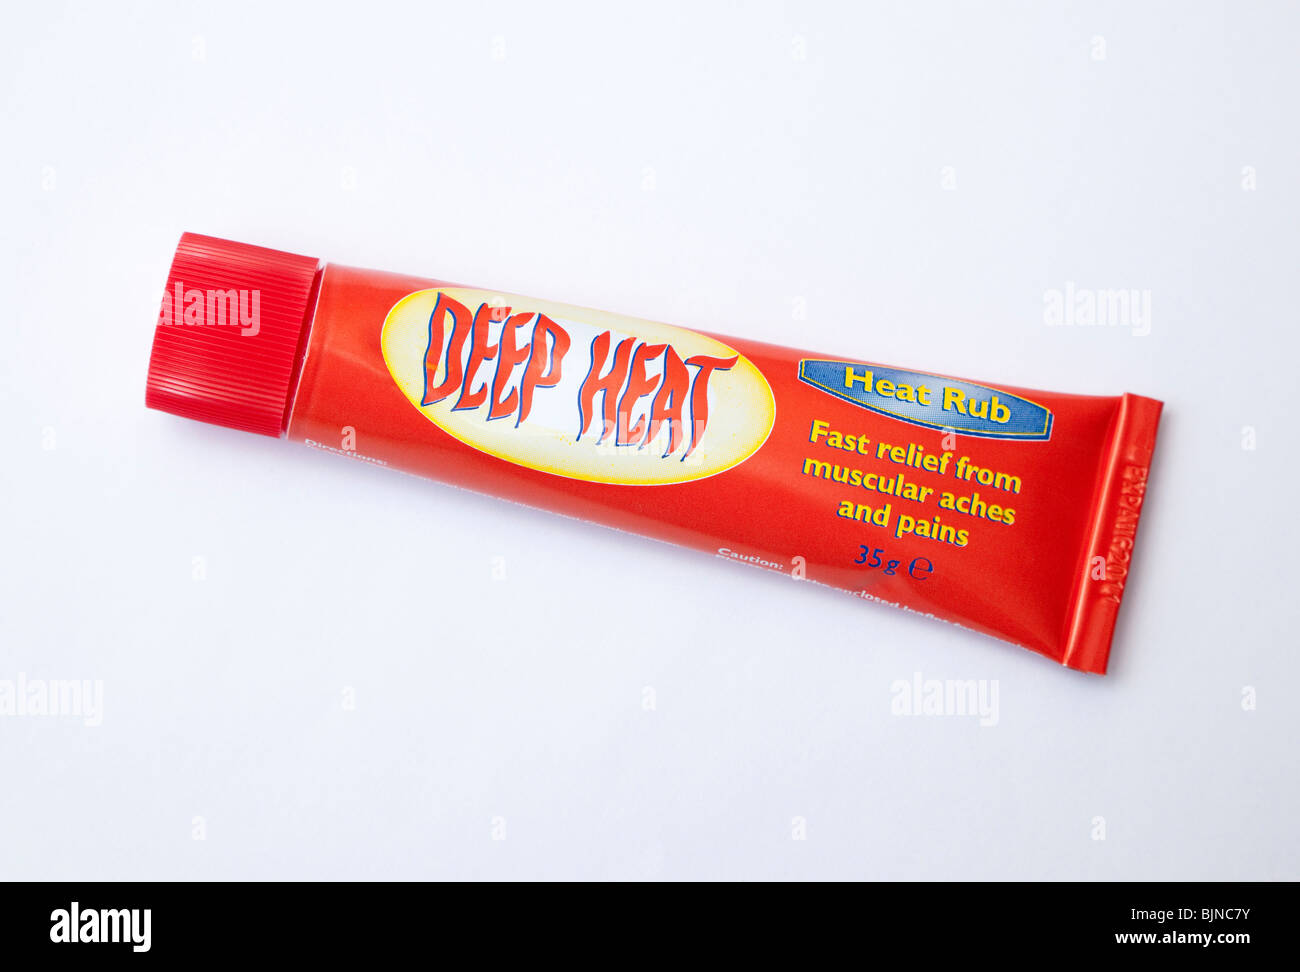 Deep Heat pain relief cream Stock Photo